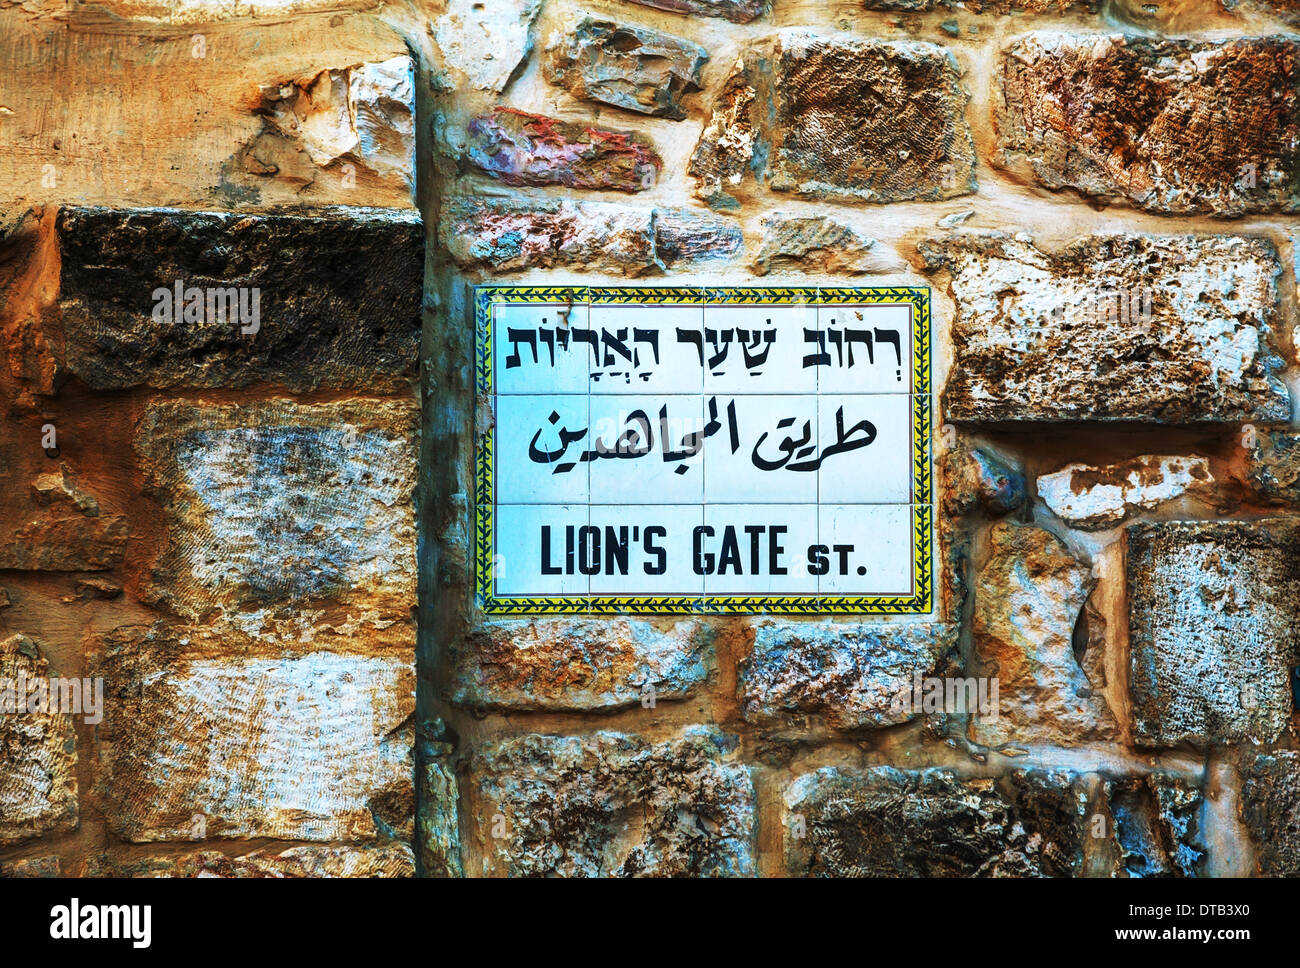 Lion gate street sign in Jerusalem, Israel Stock Photo